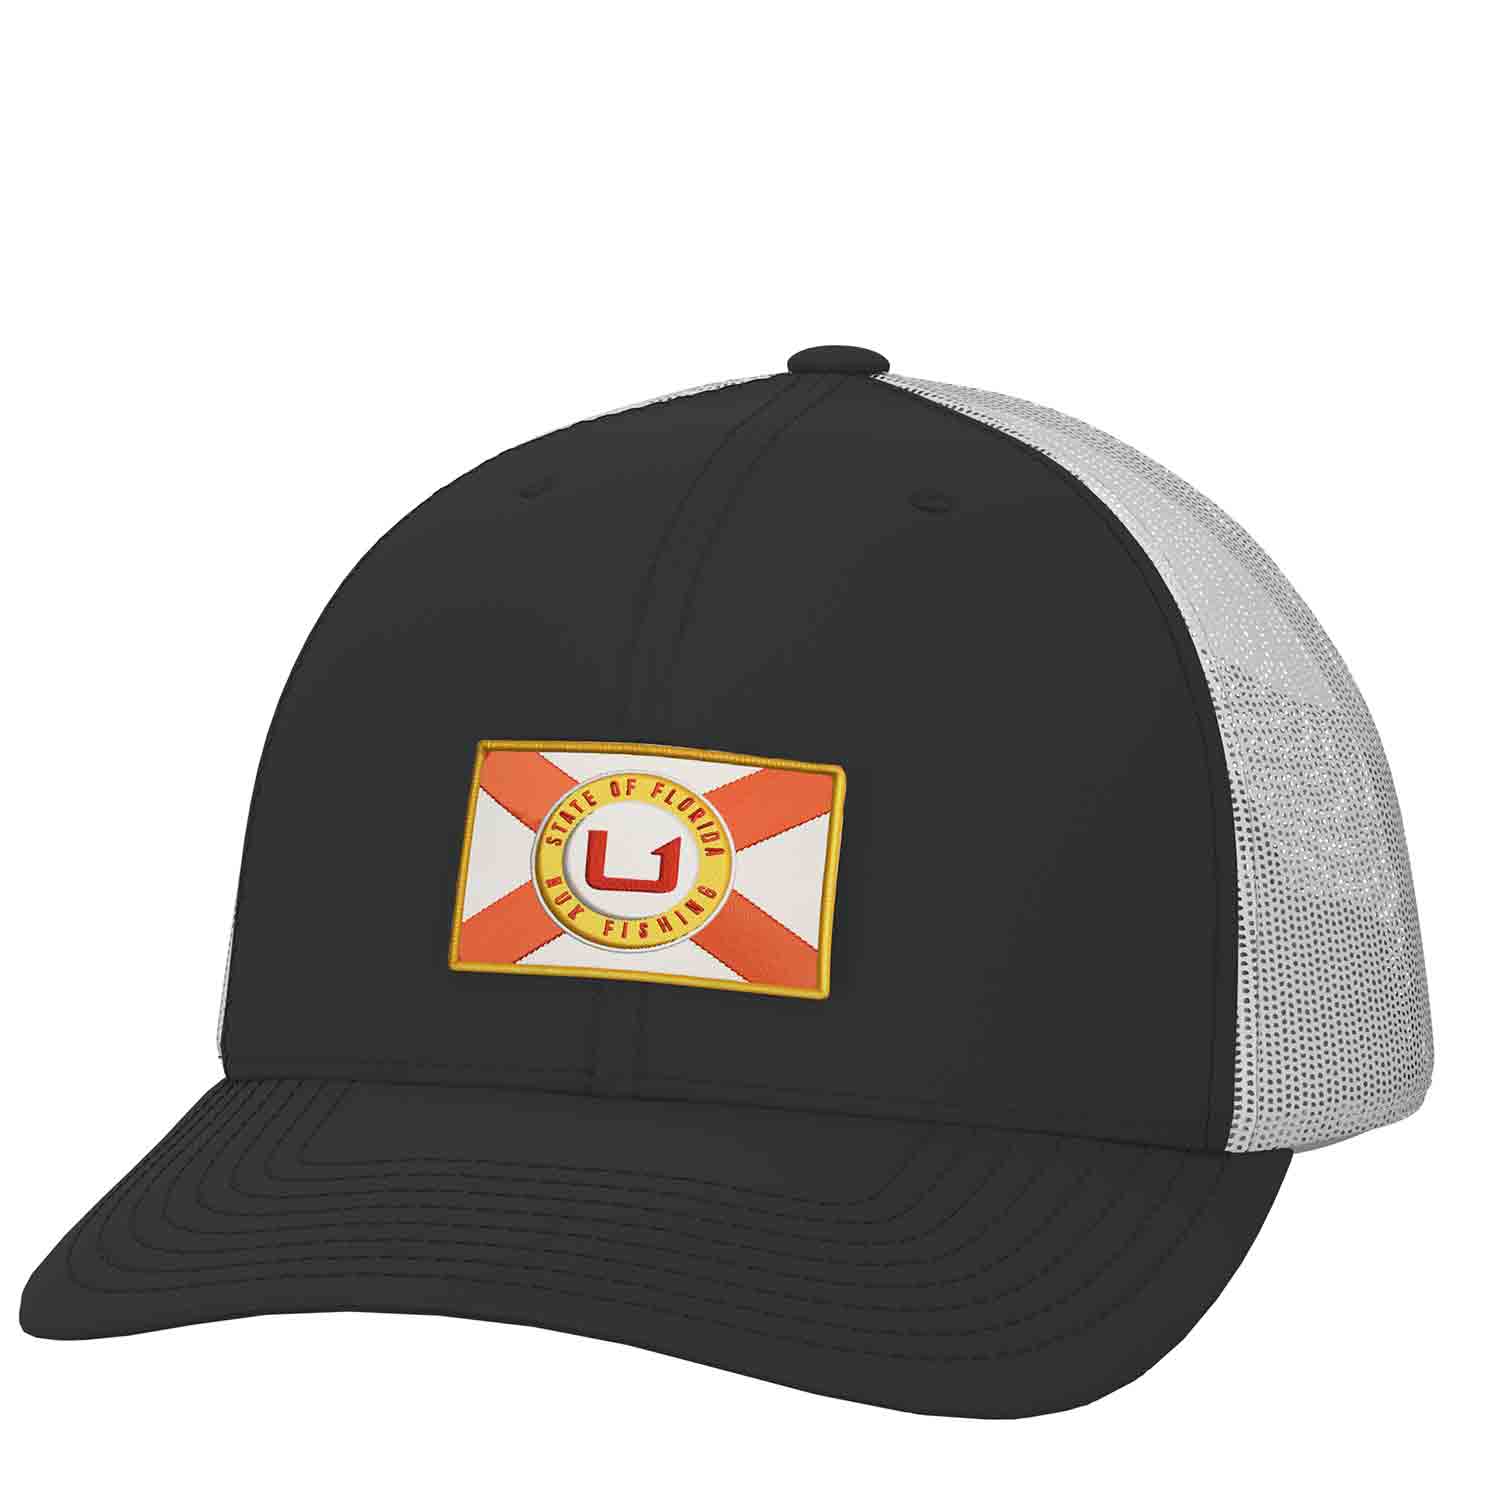 HUK State Of Florida Trucker Hat